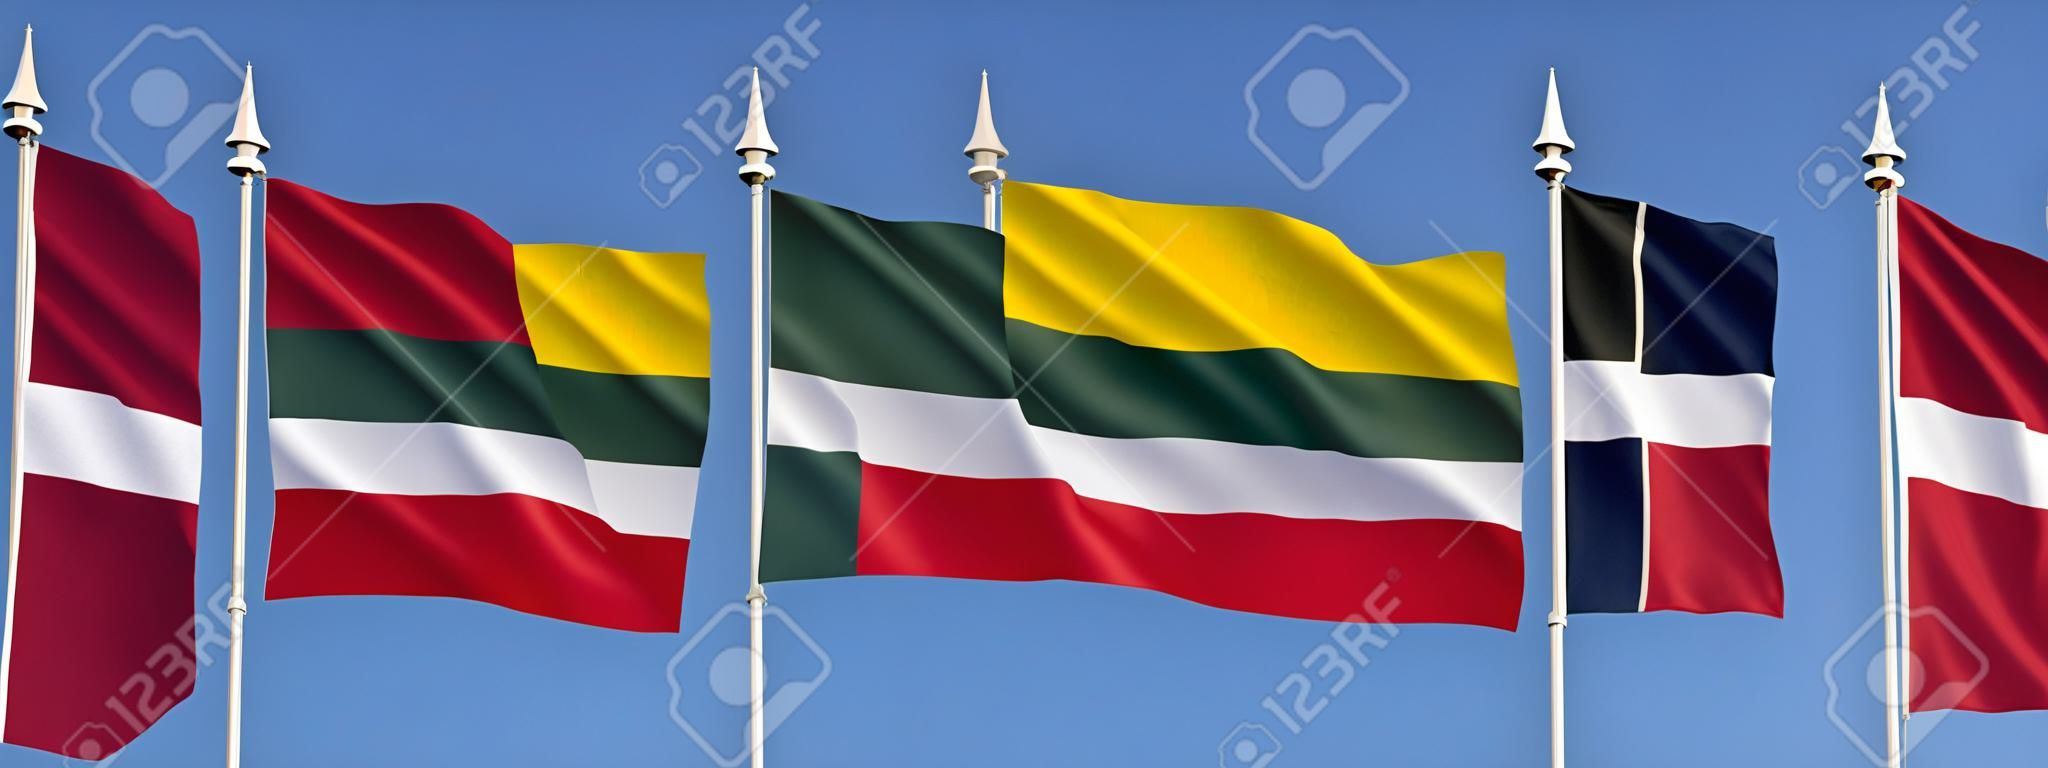 Флаги стран Балтии - Латвии, Литве и Эстонии.